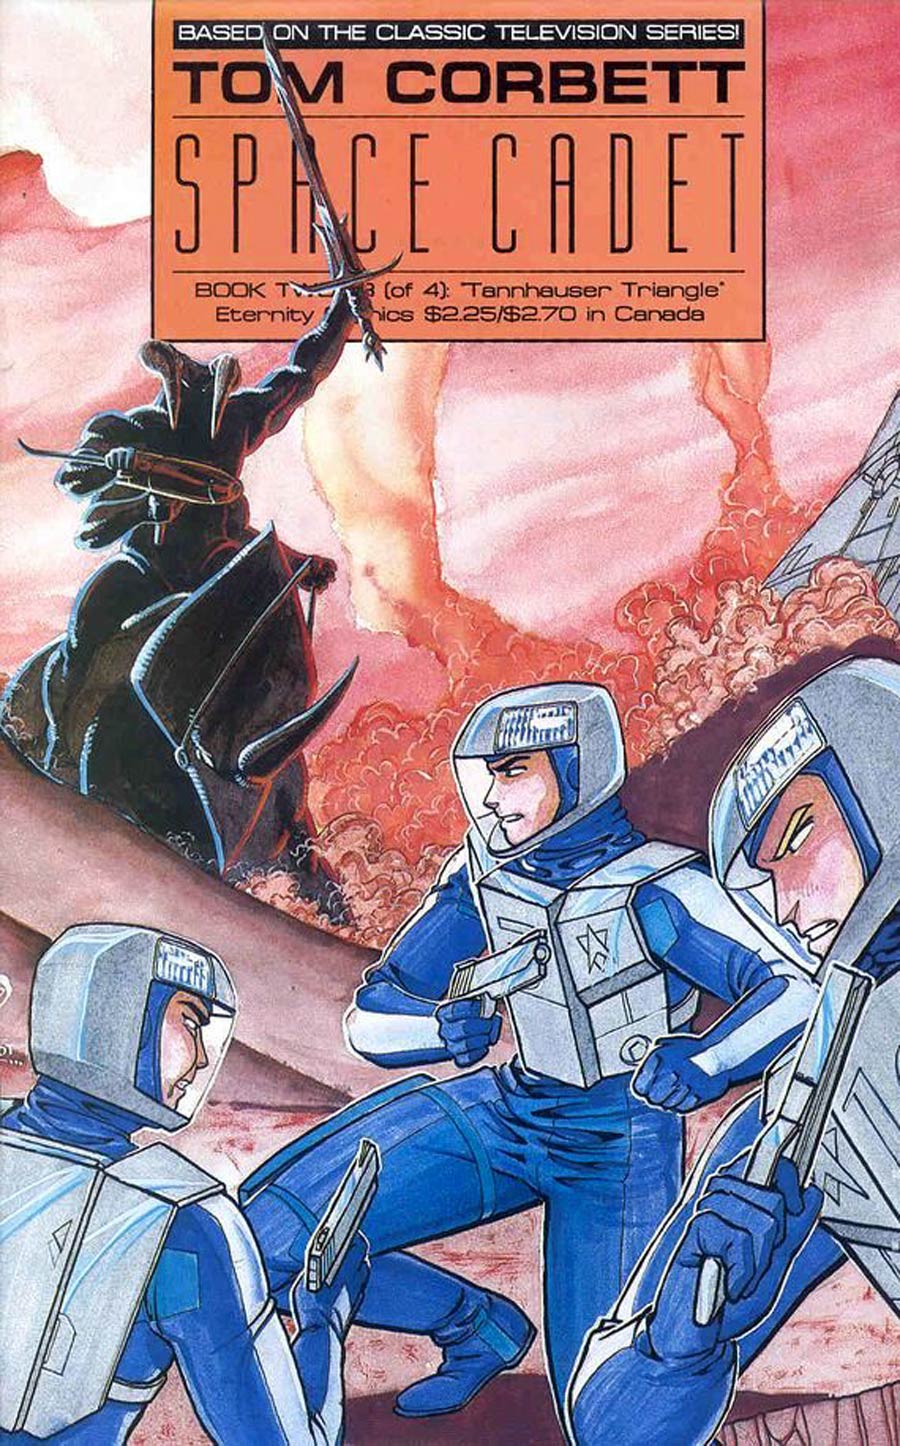 Tom Corbett Space Cadet Book Two #3